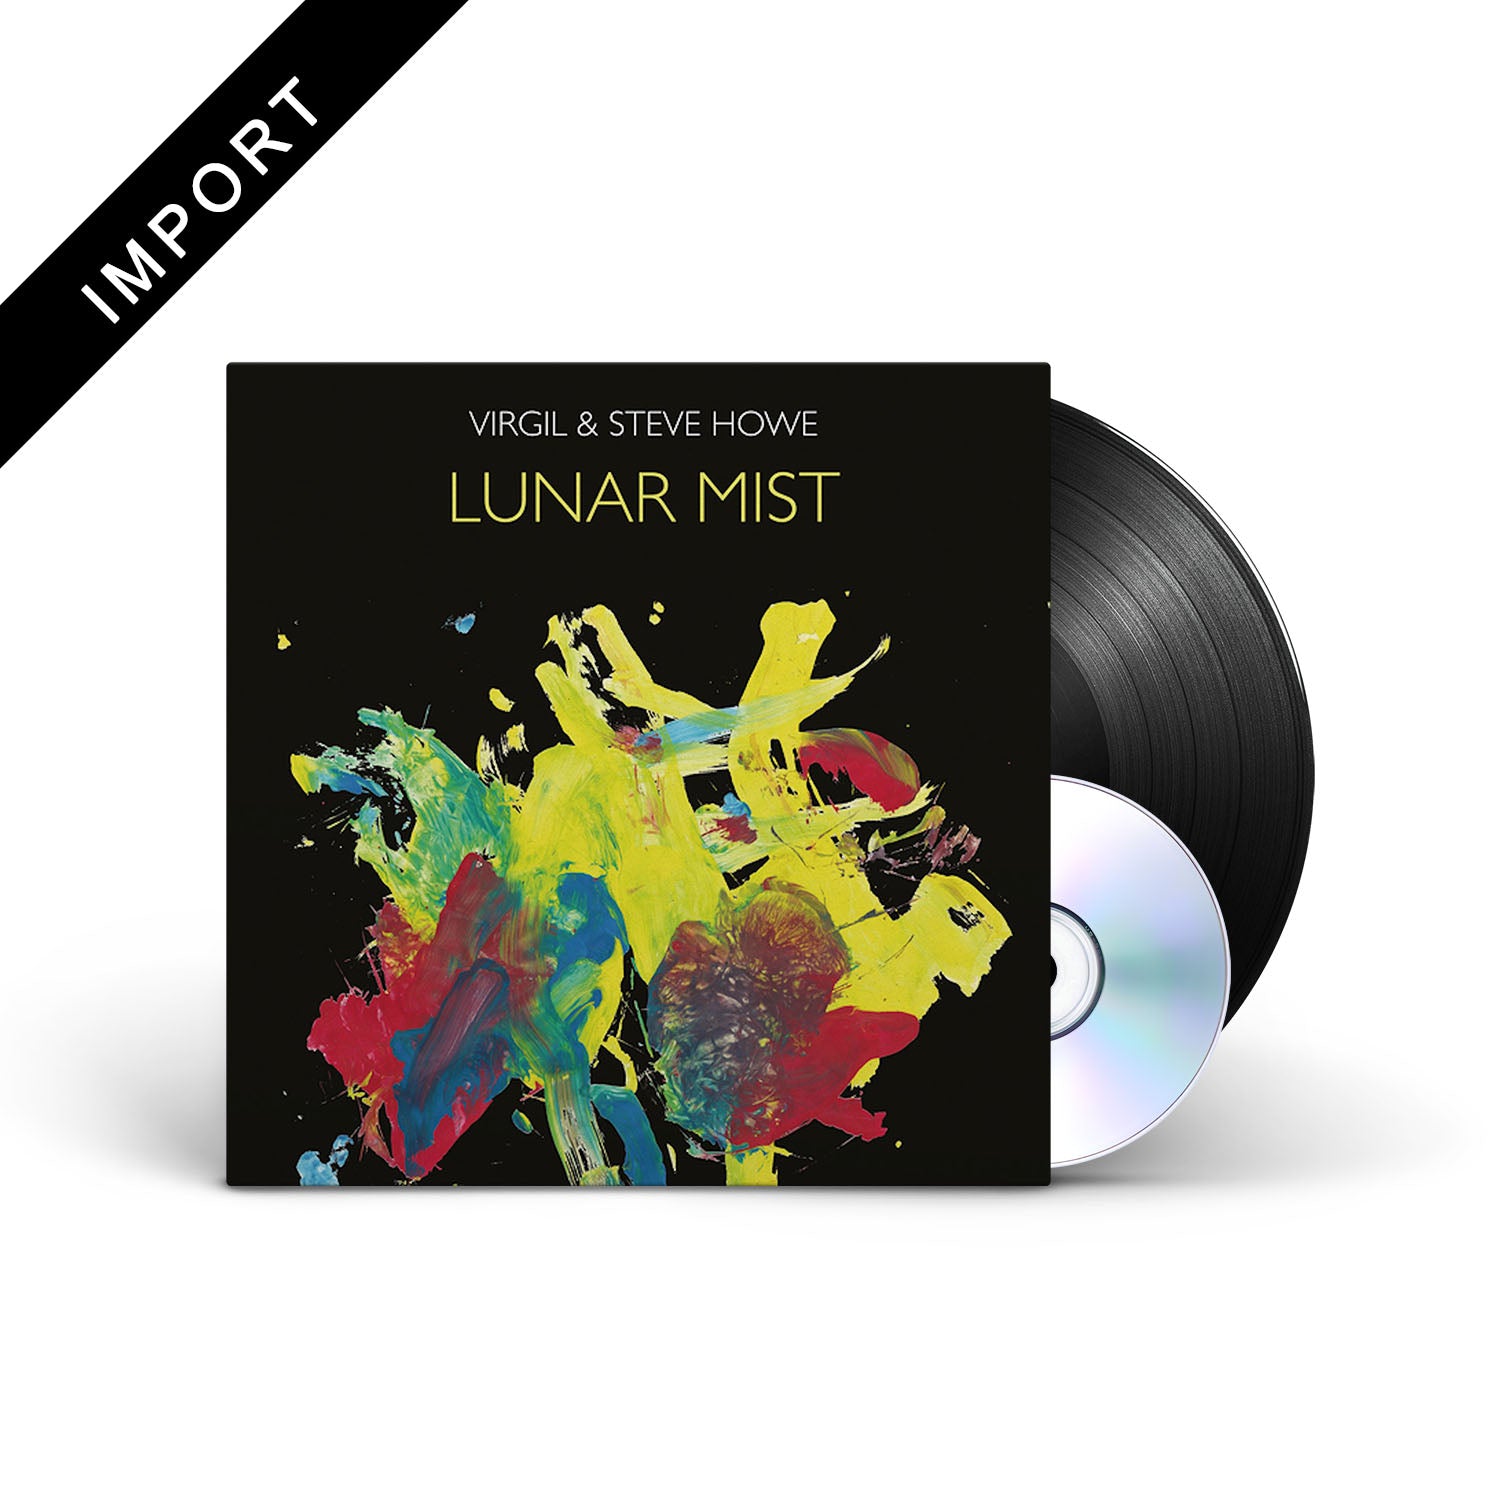 VIRGIL & STEVE HOWE - Lunar Mist - LP + CD